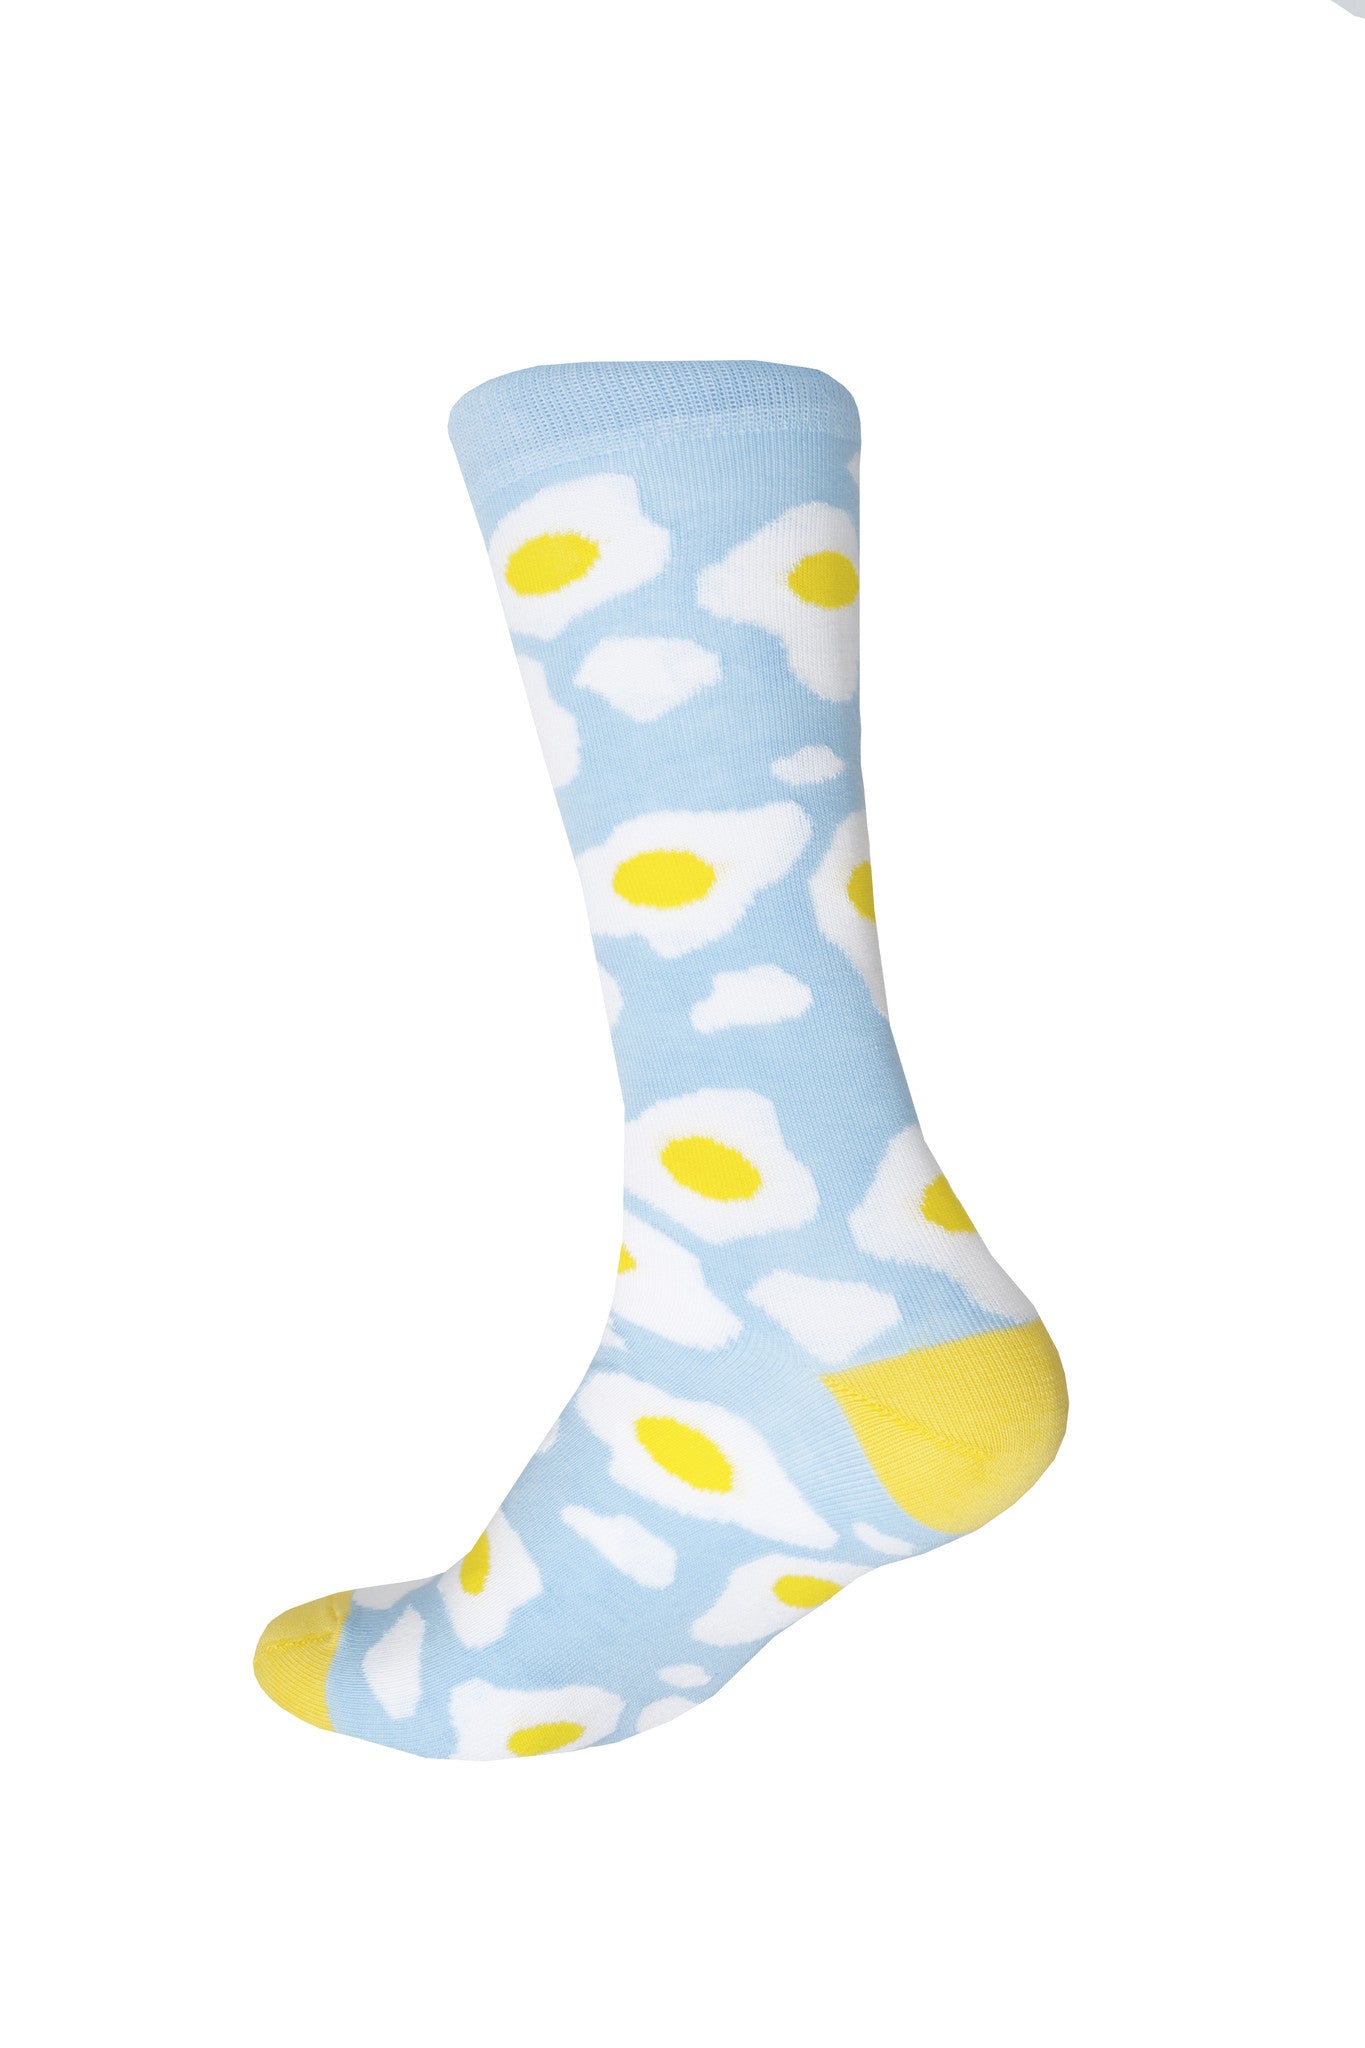 Giraffecool-Giraffe-Cool-Blue-Yellow-White-Clouds-And-Eggs-Brushed-Cotton-Fashion-Socks-Back